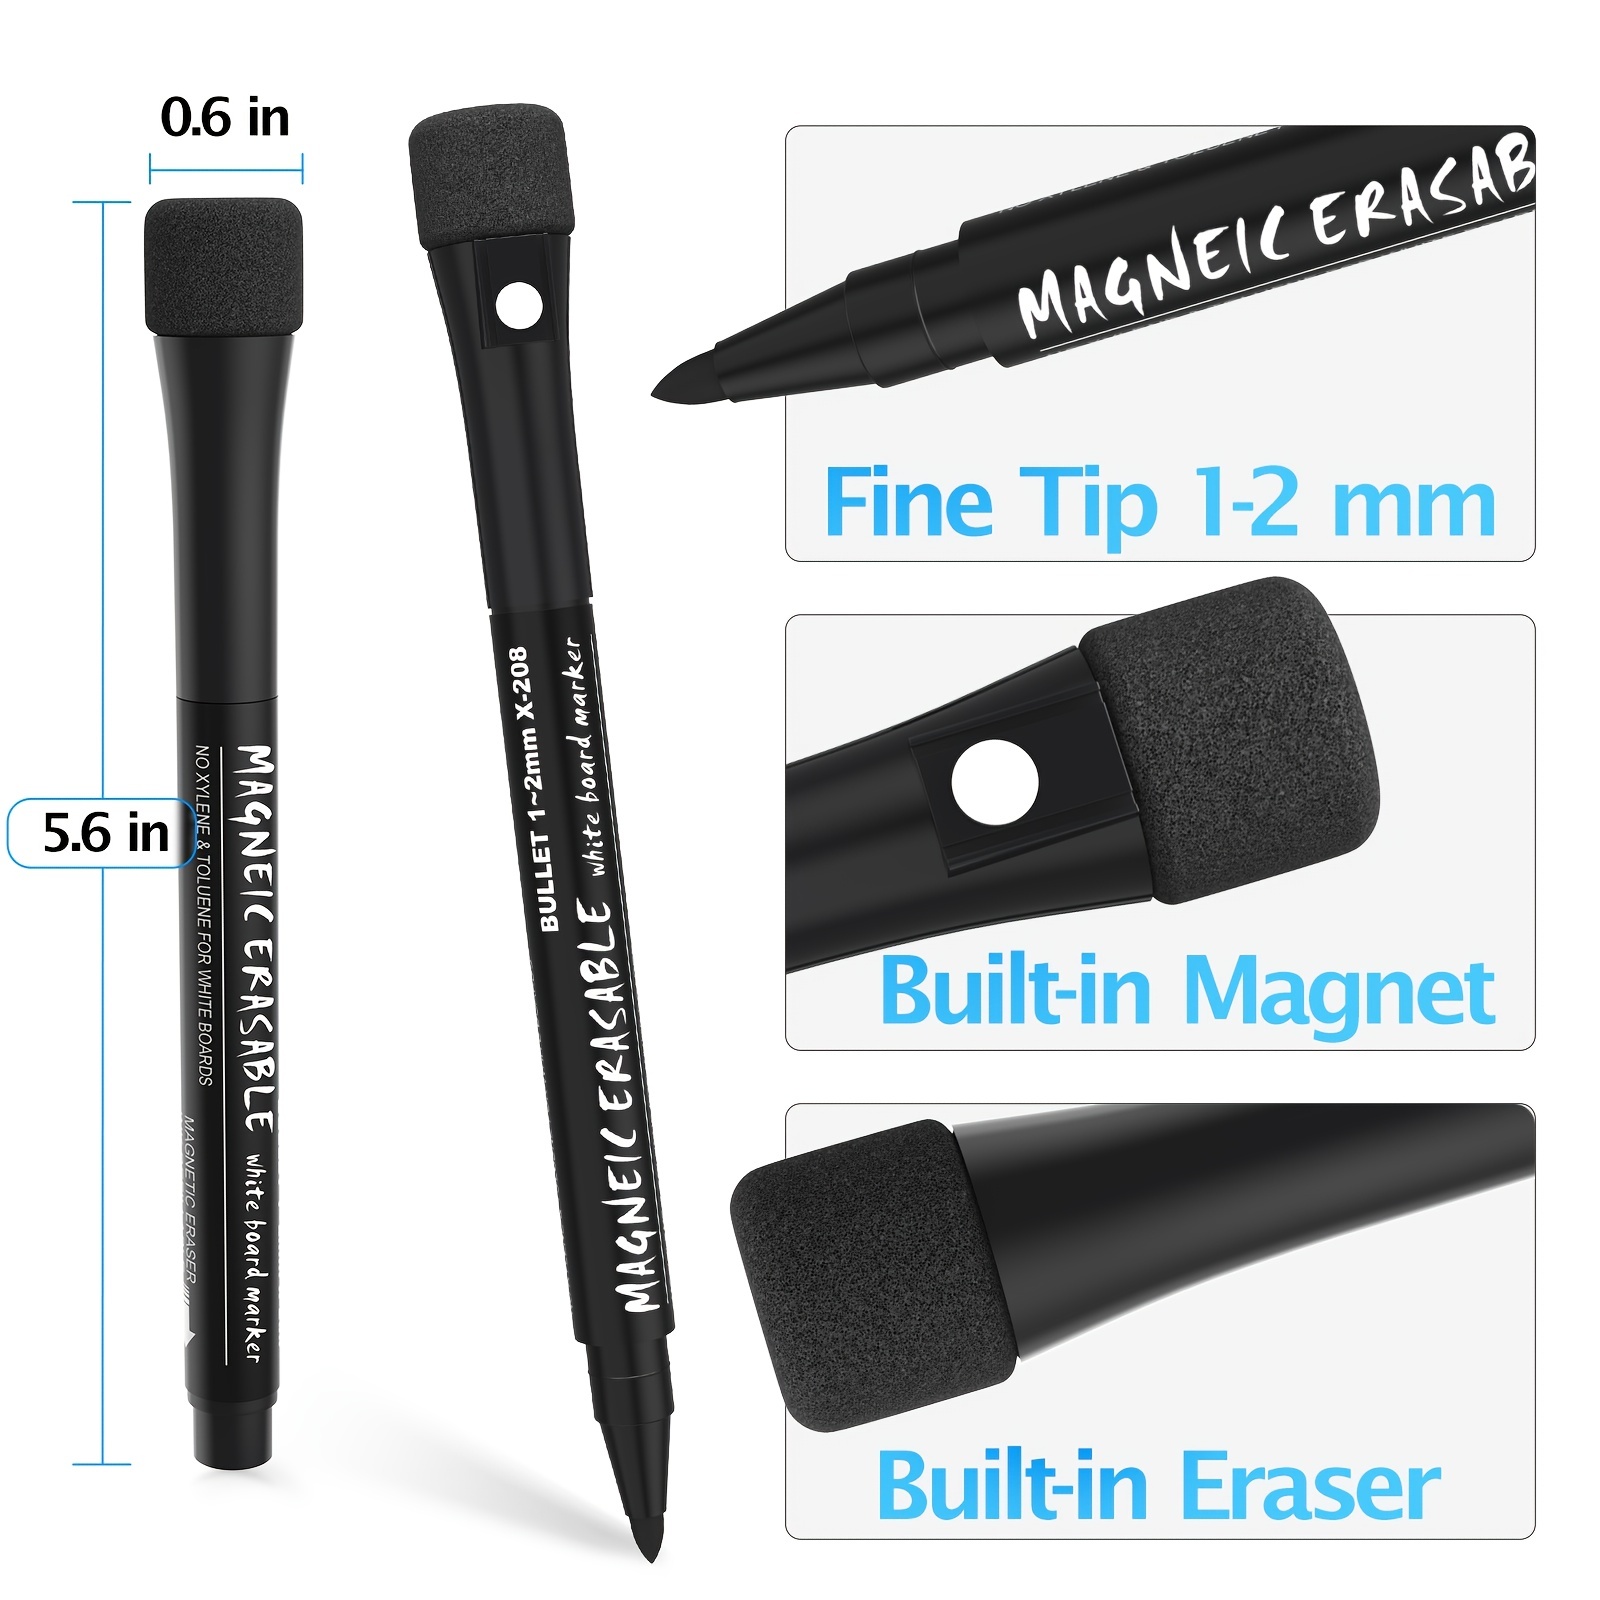 Sunacme Built-In Felt Erasers Magnetic Fine Point Dry Erase Pens, 16-Piece